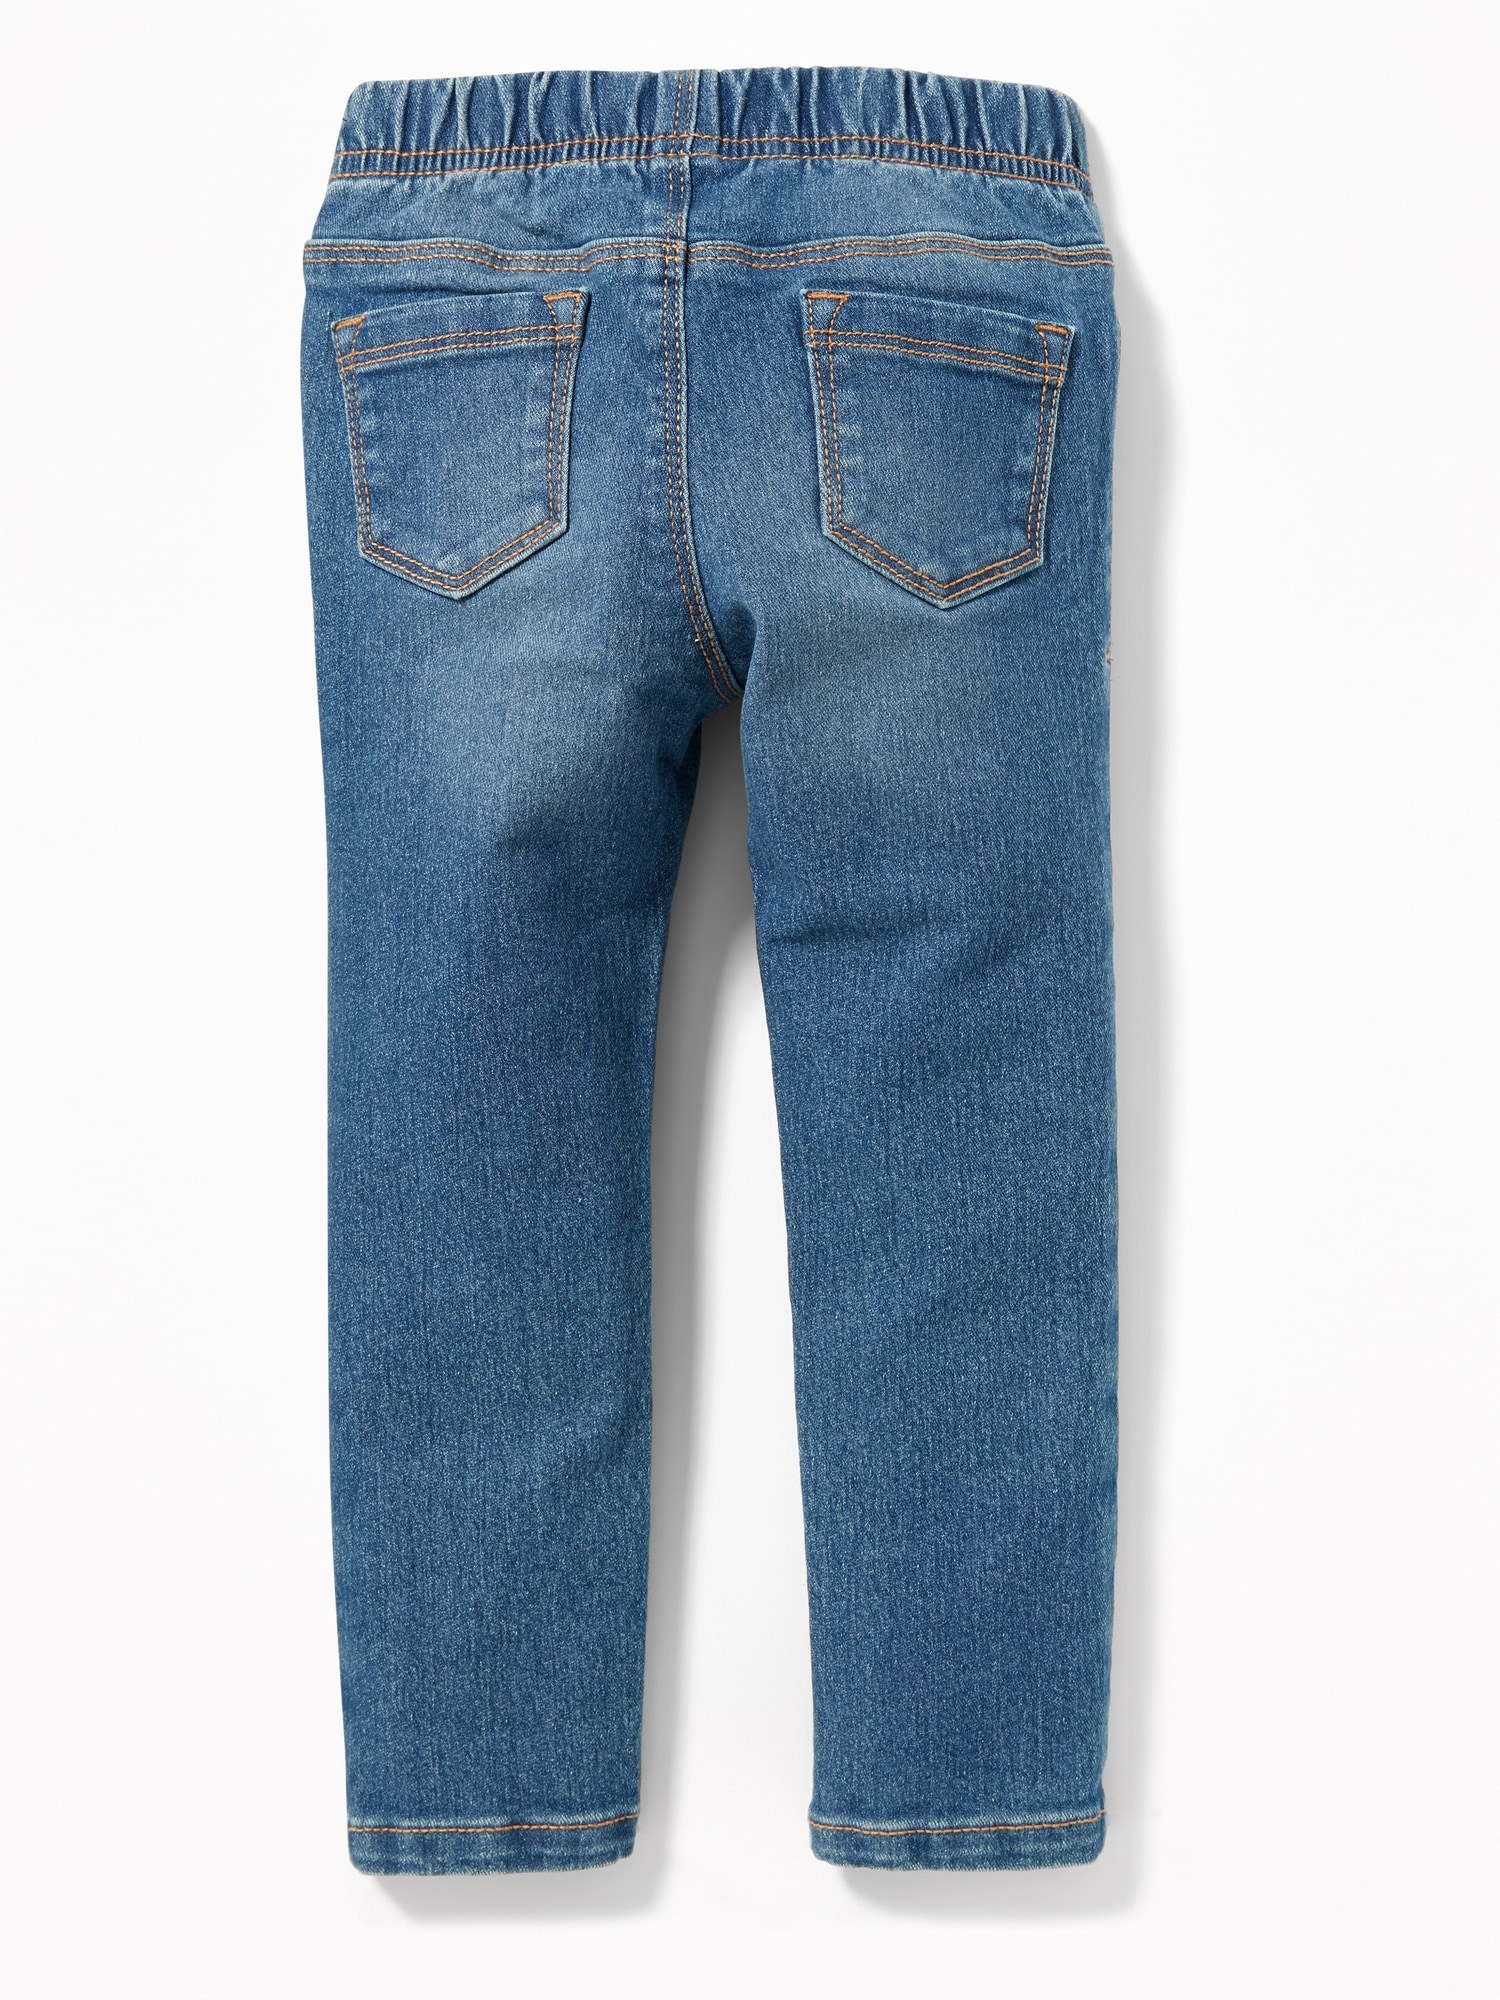 jegging jeans for girls